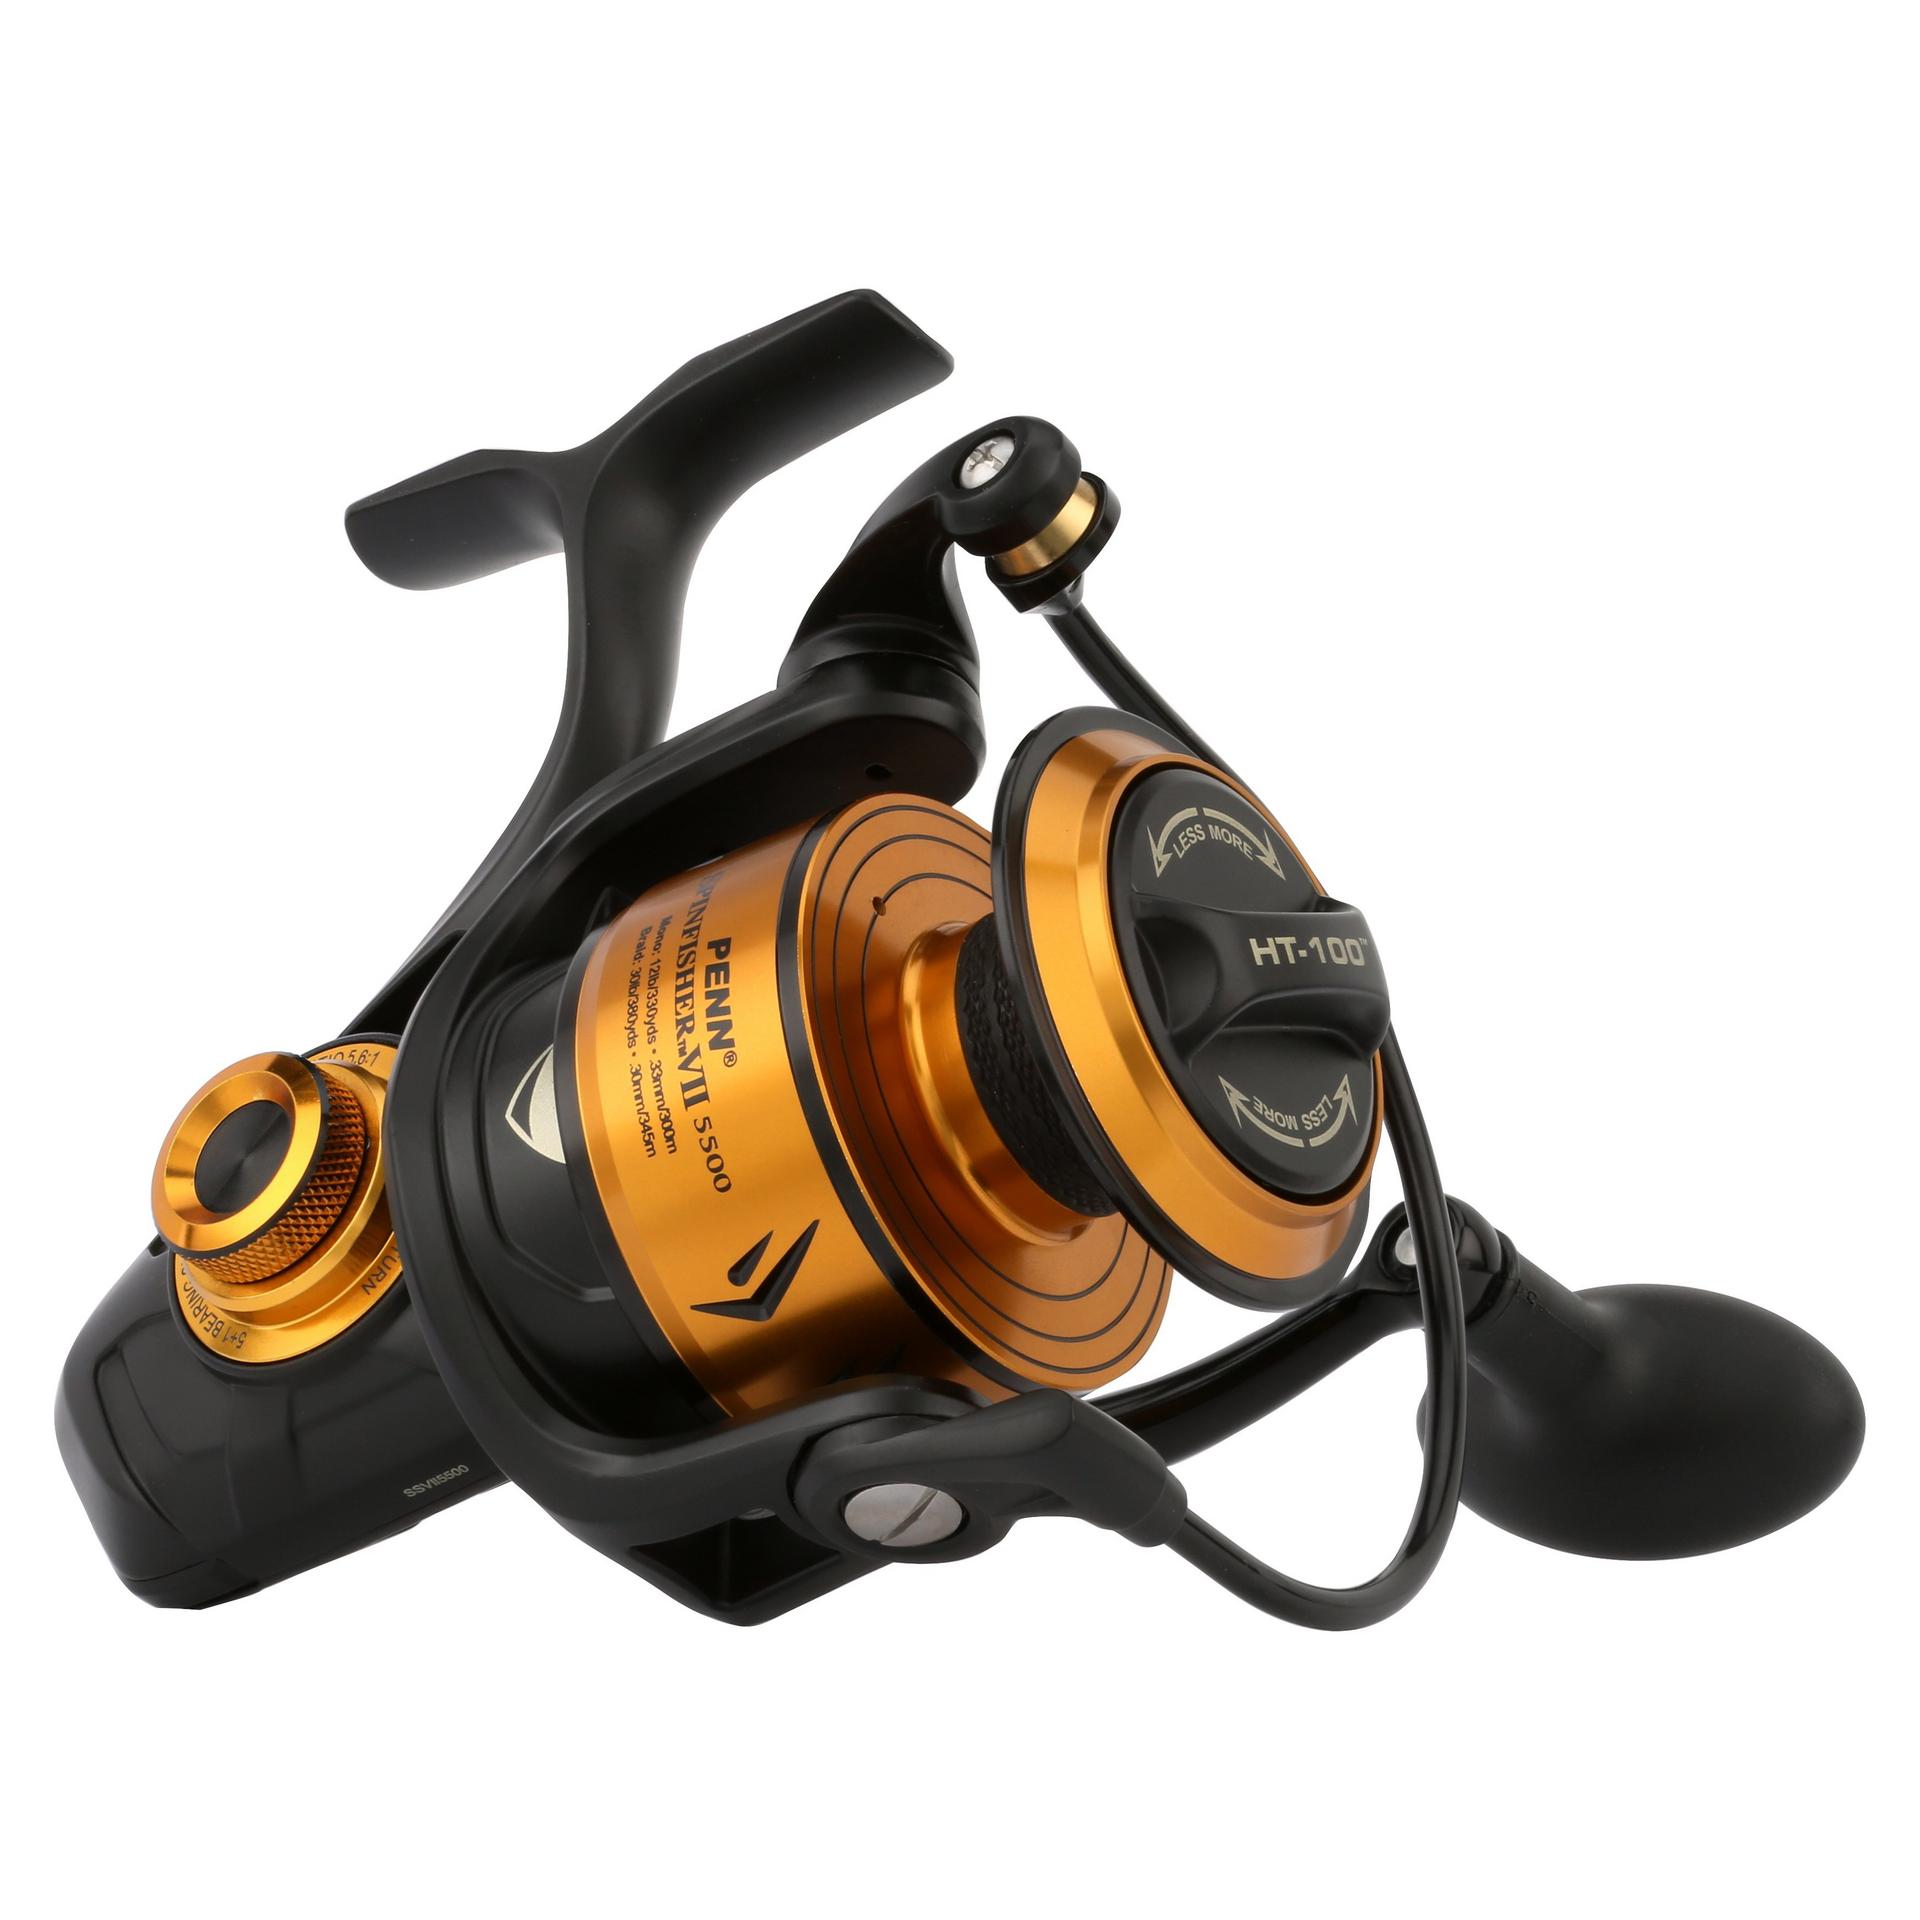 PENN Fishing - The new PENN Torque II spinning reel is designed